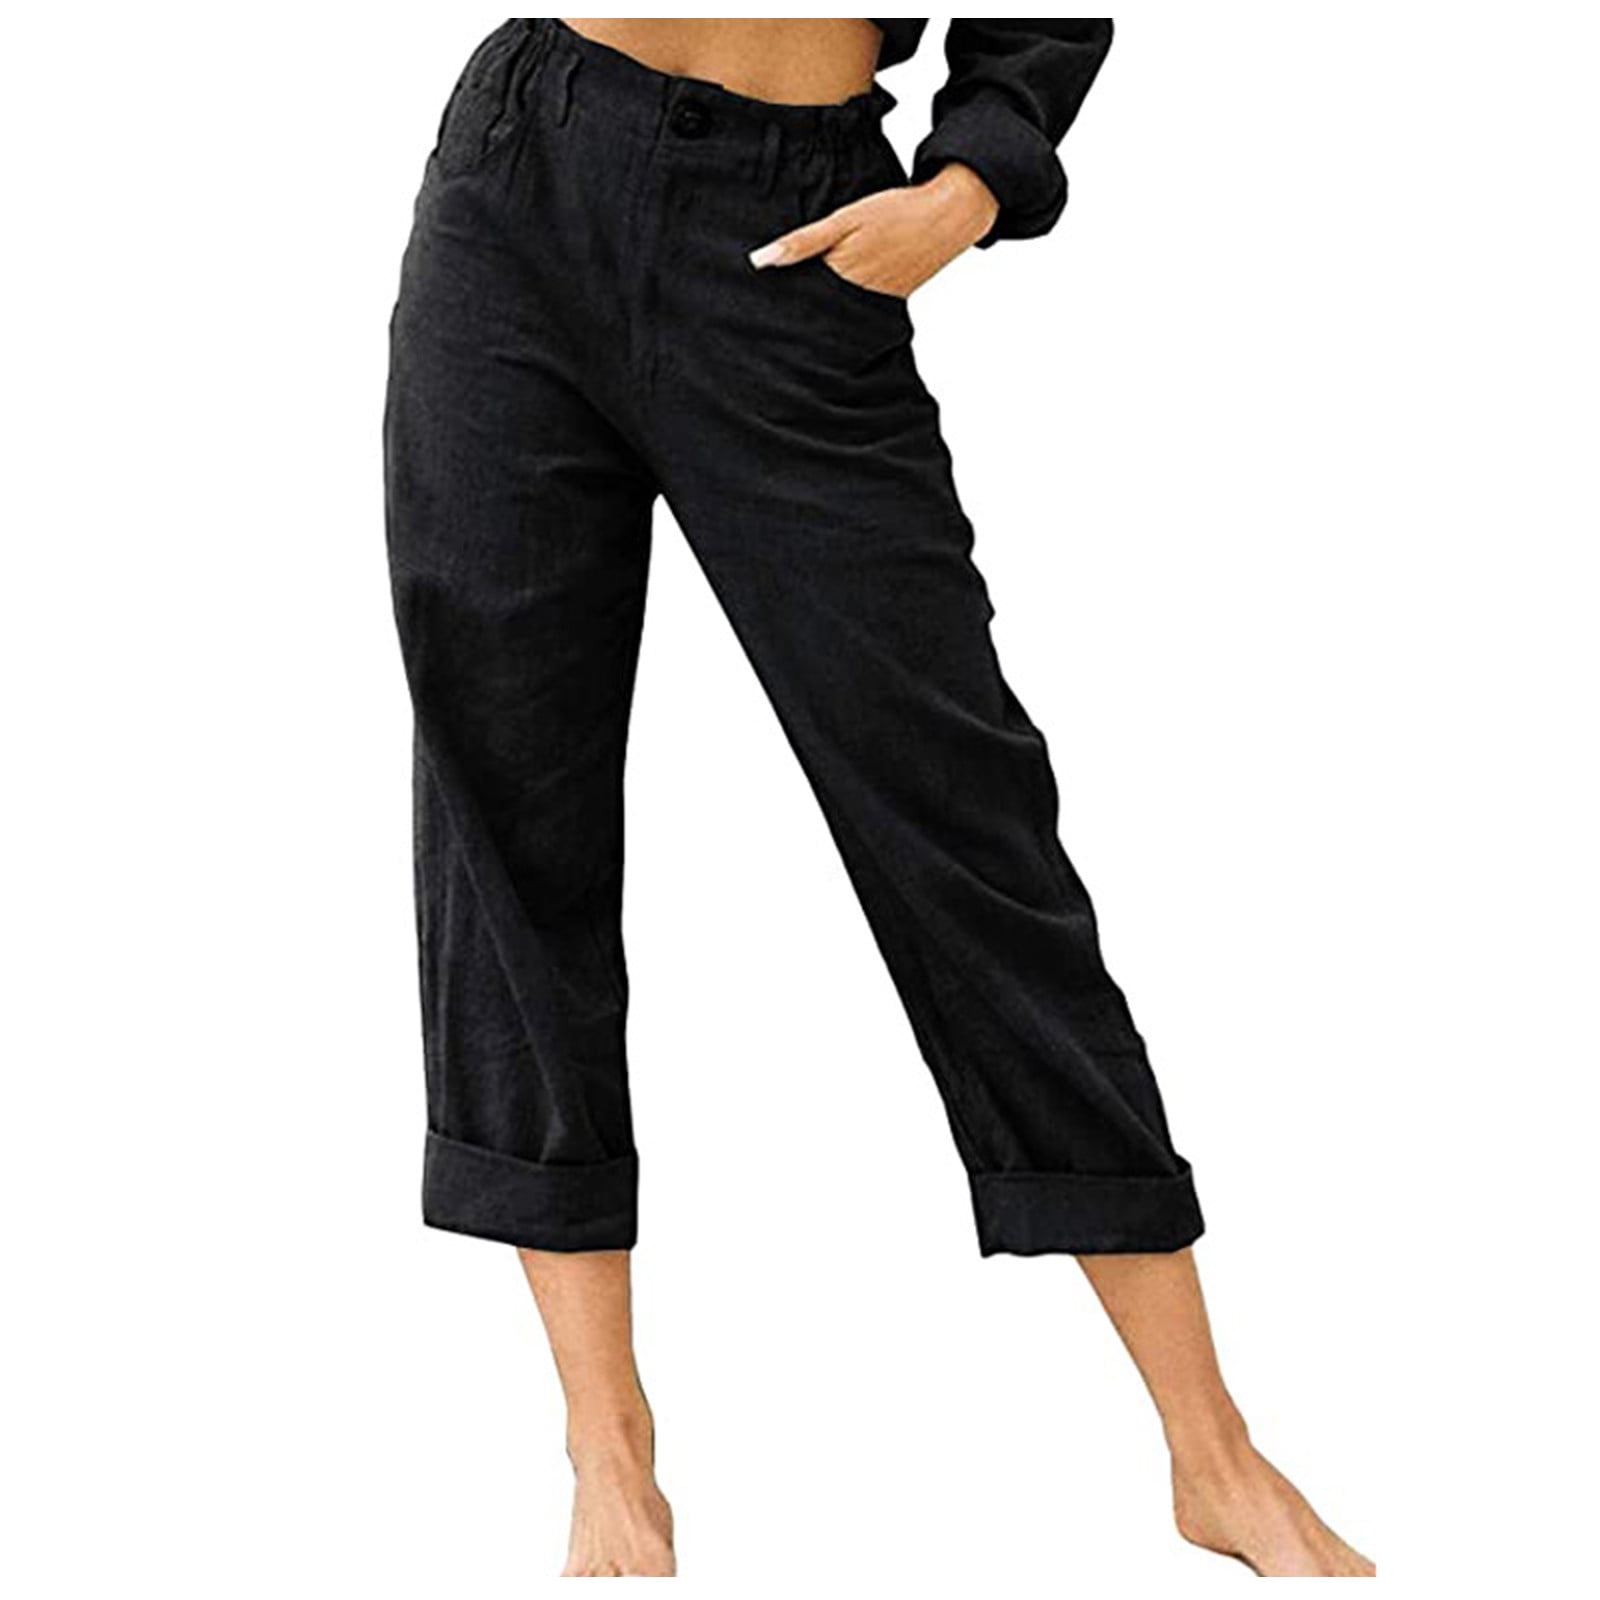 Capreze Dress Pants for Women High Waist Office Work Pant with Pockets  Casual Straight Leg Slacks Business Trousers Light Gray XL